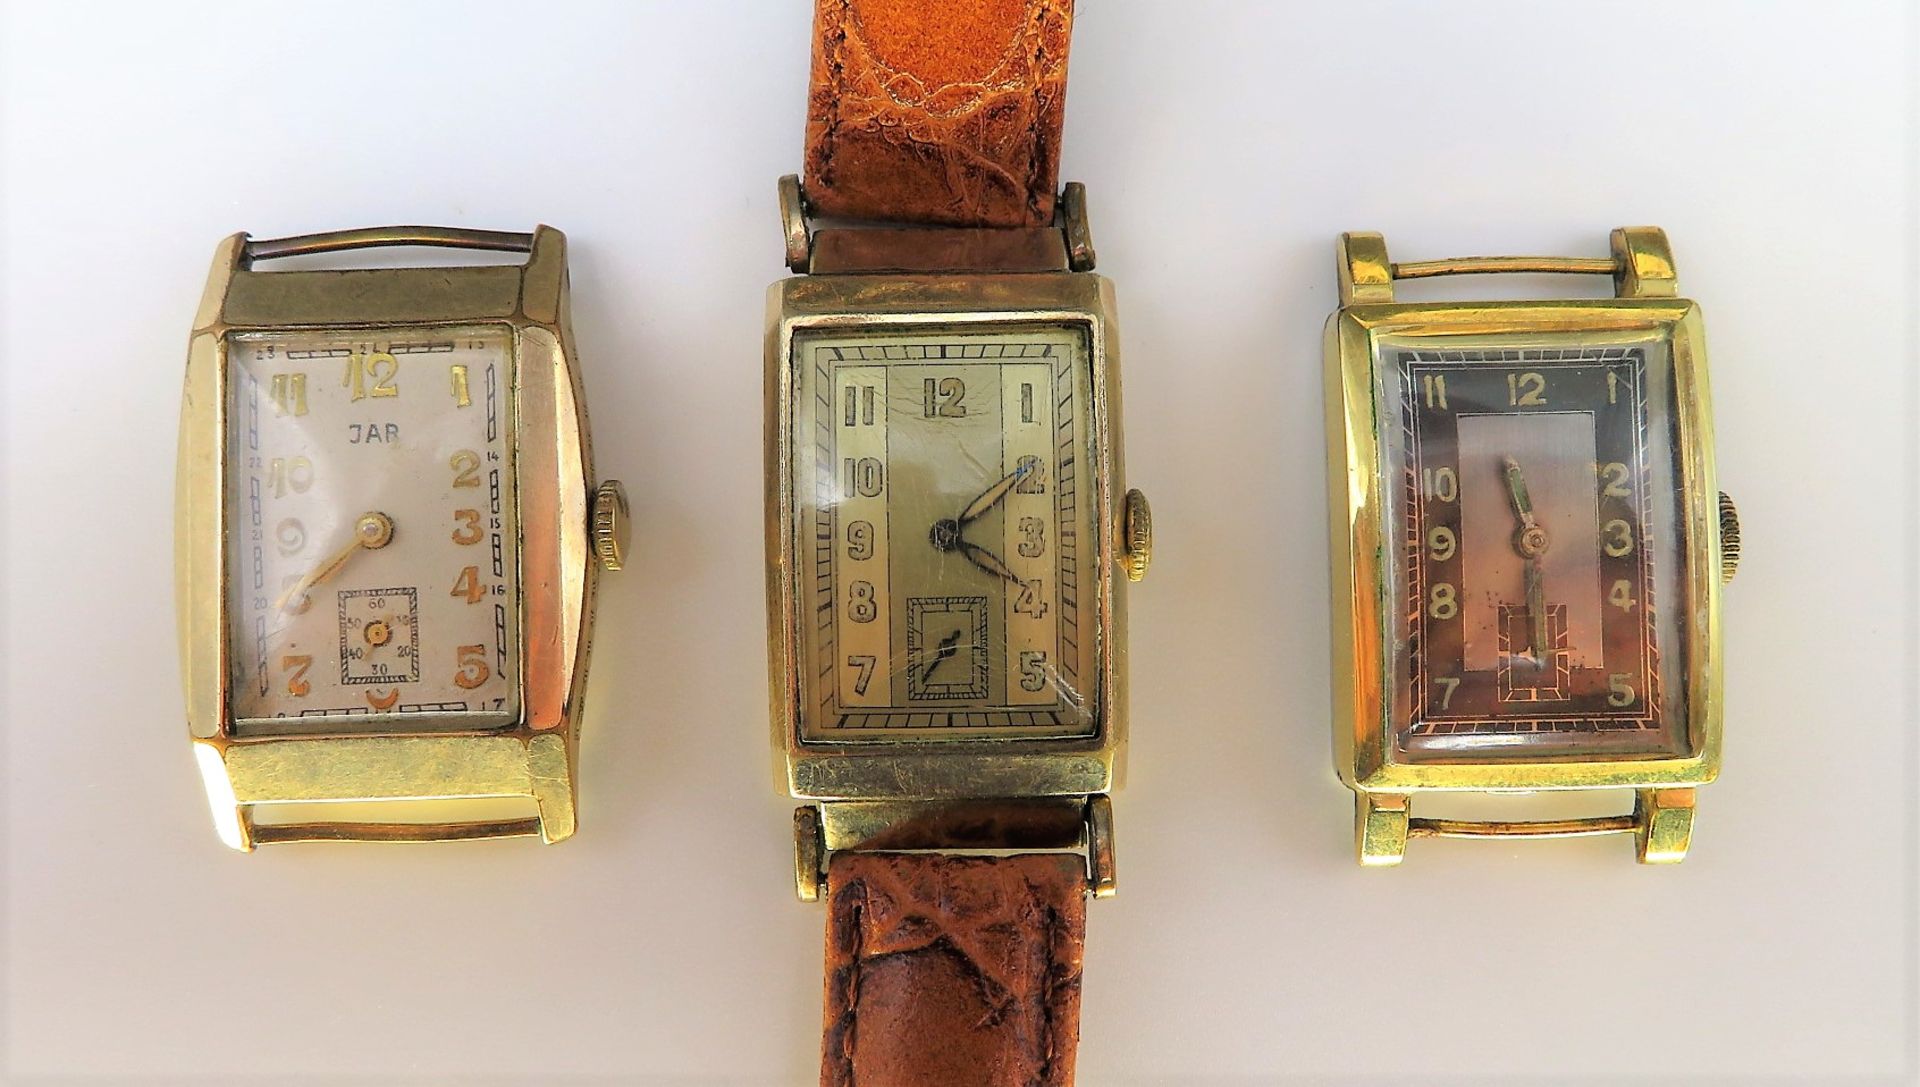 3 diverse Vintage-Armbanduhren, 1930/40er Jahre, vergoldete Gehäuse, Handaufzug, defekt, ca. 2,3 x